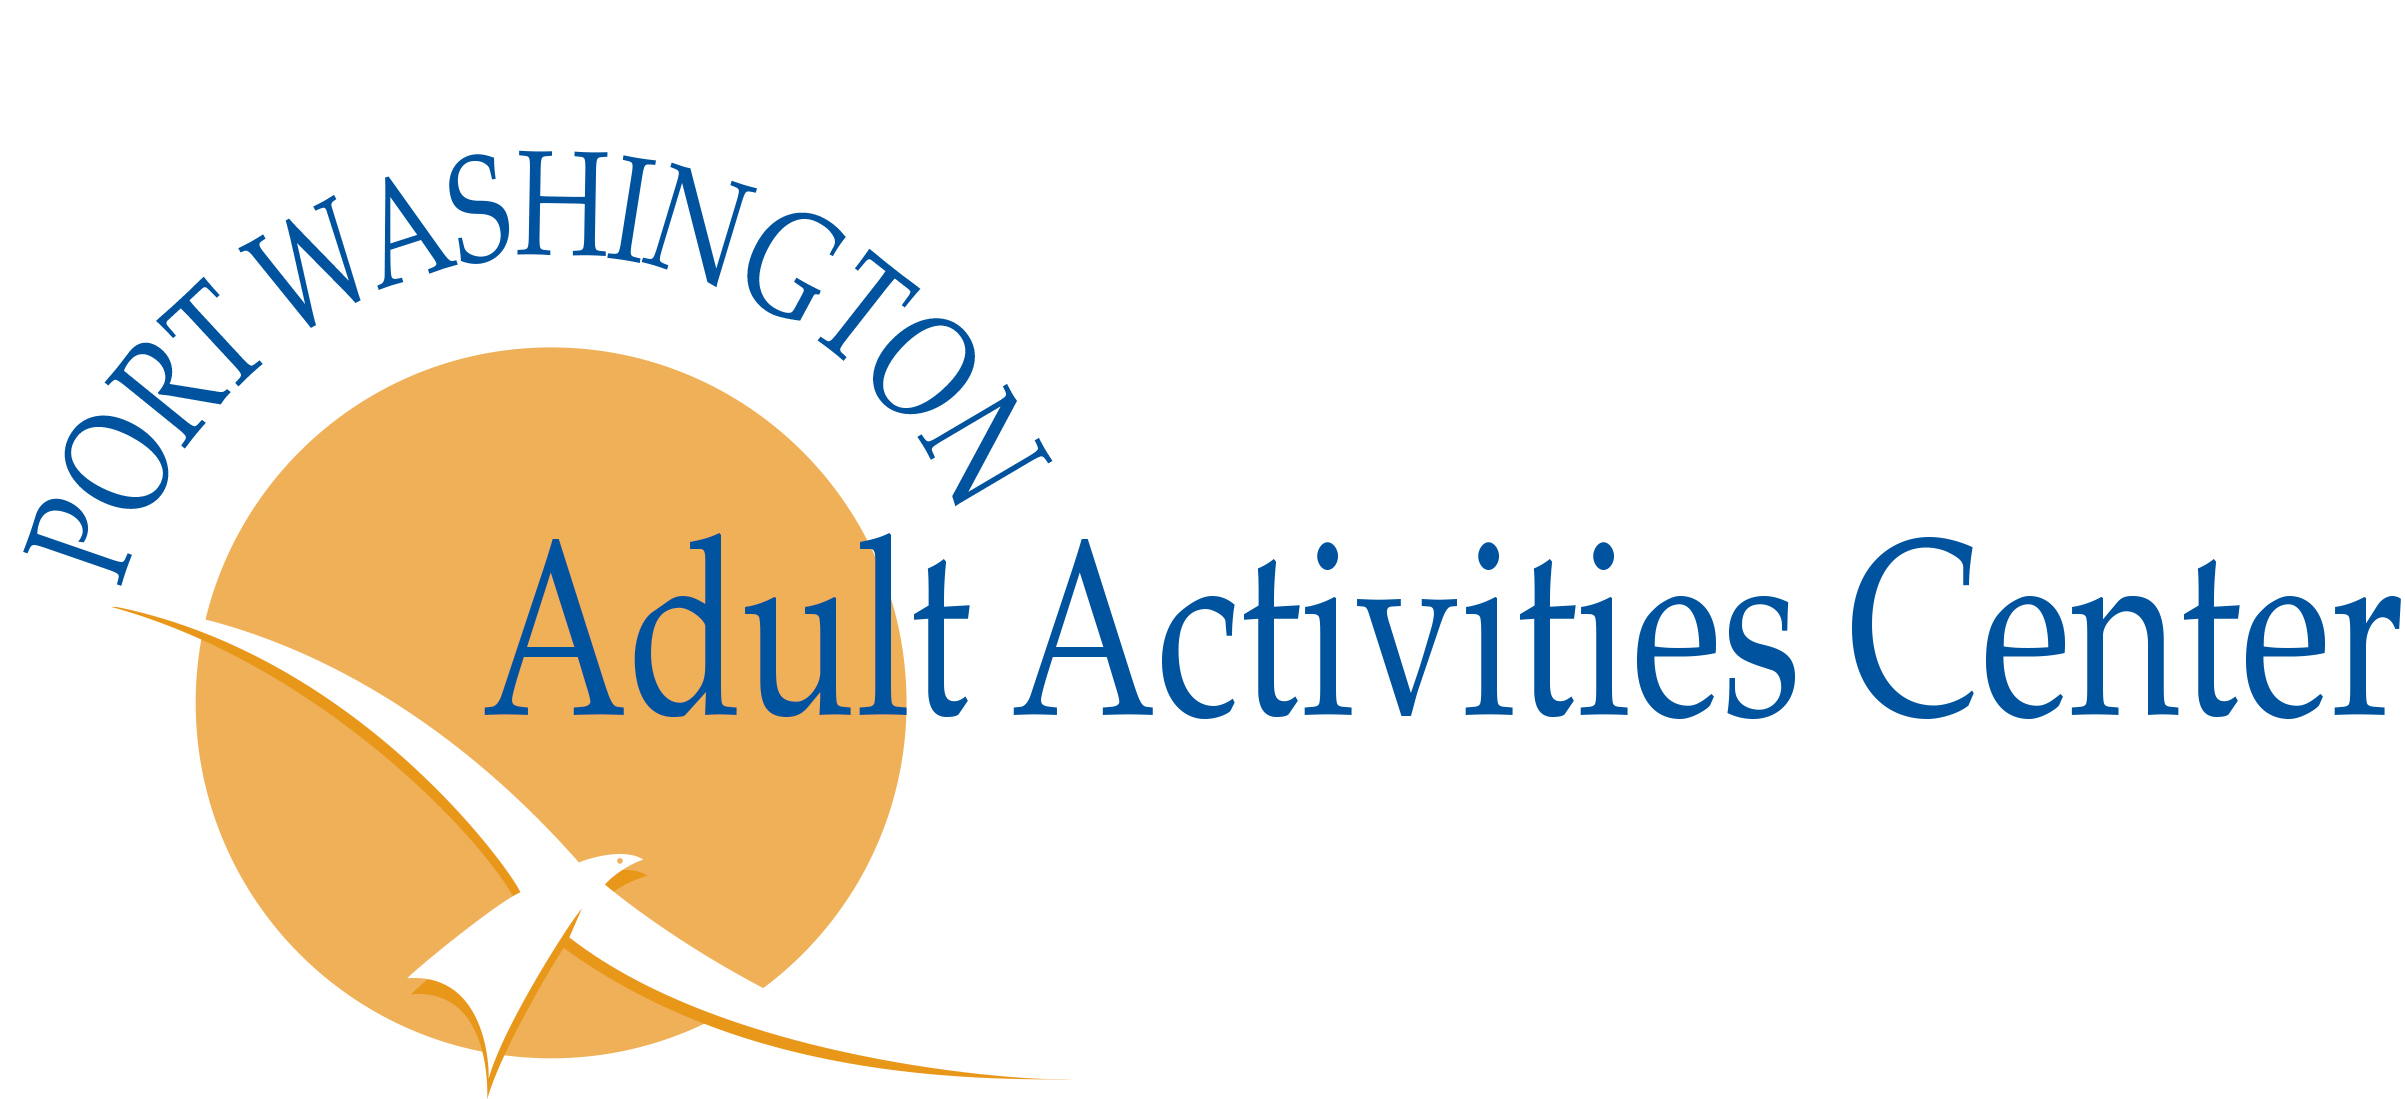 Port Washington Adult Activities Center